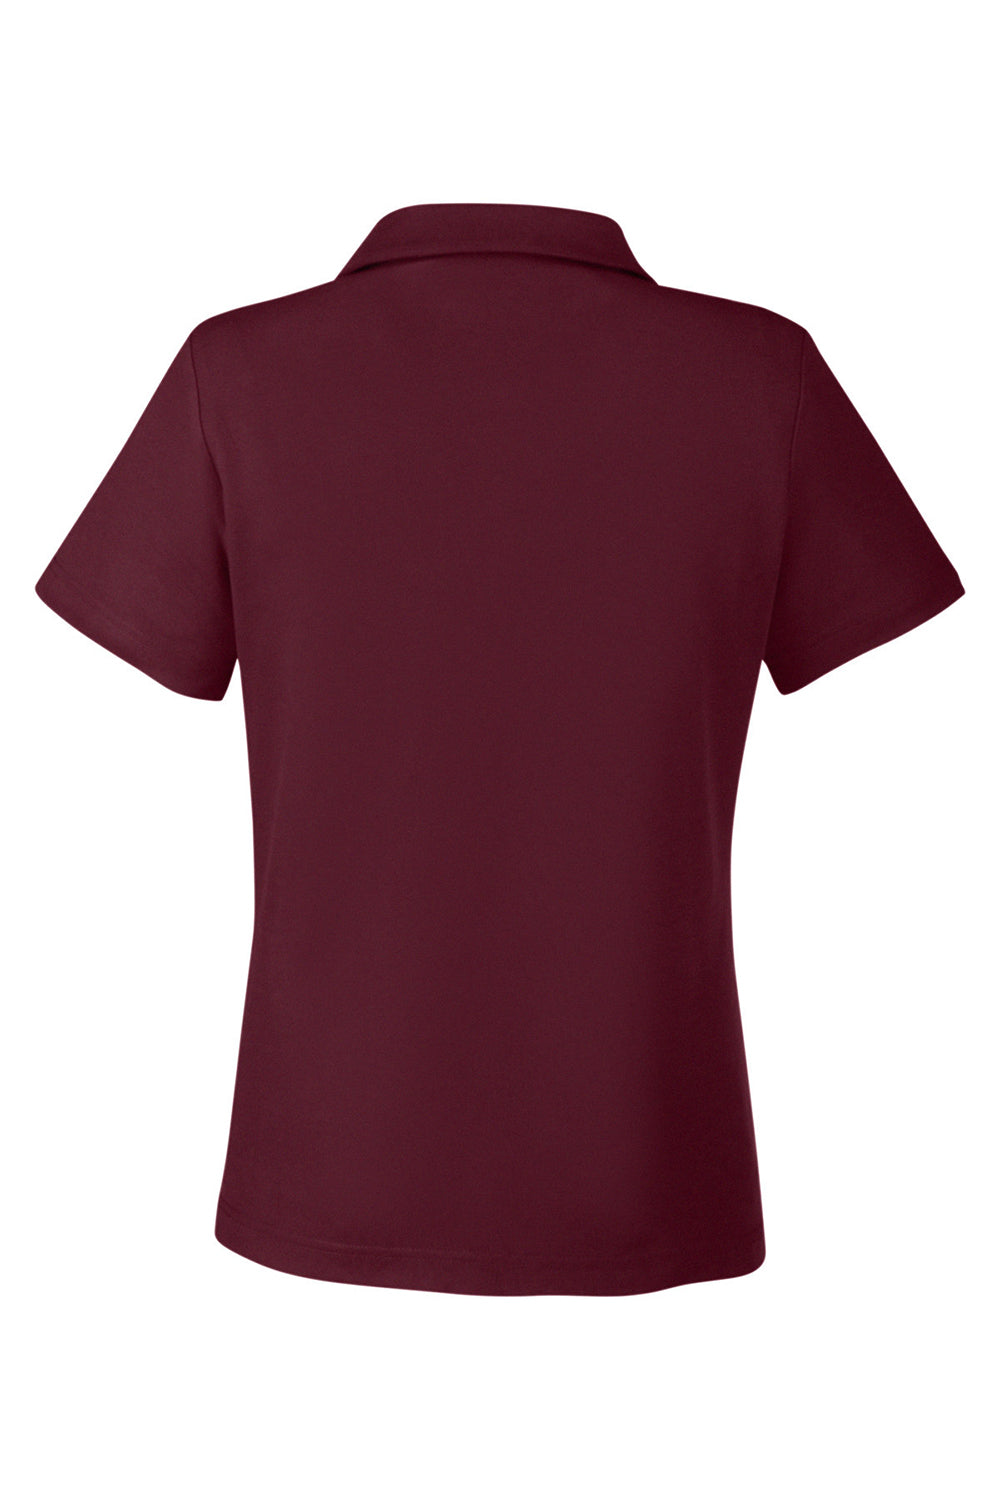 Core 365 CE112W Womens Fusion ChromaSoft Performance Moisture Wicking Pique Short Sleeve Polo Shirt Burgundy Flat Back